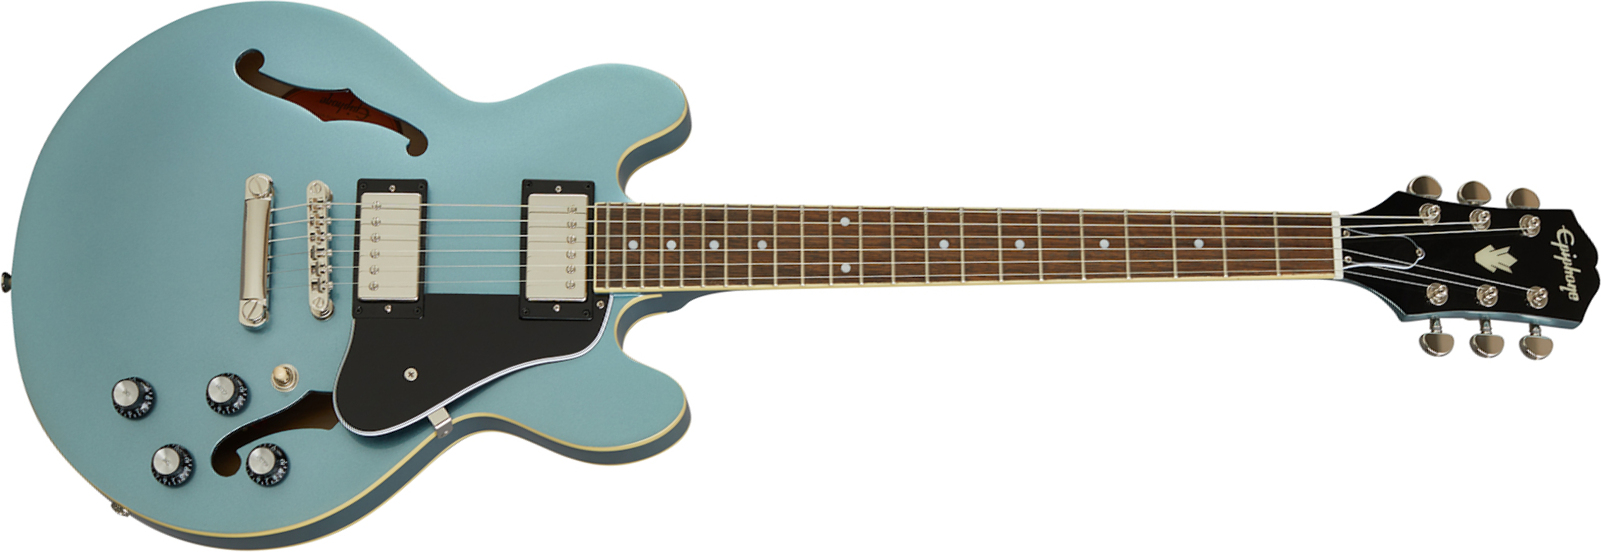 Epiphone Es-339 Inspired By Gibson 2020 2h Ht Rw - Pelham Blue - Semi hollow elektriche gitaar - Main picture